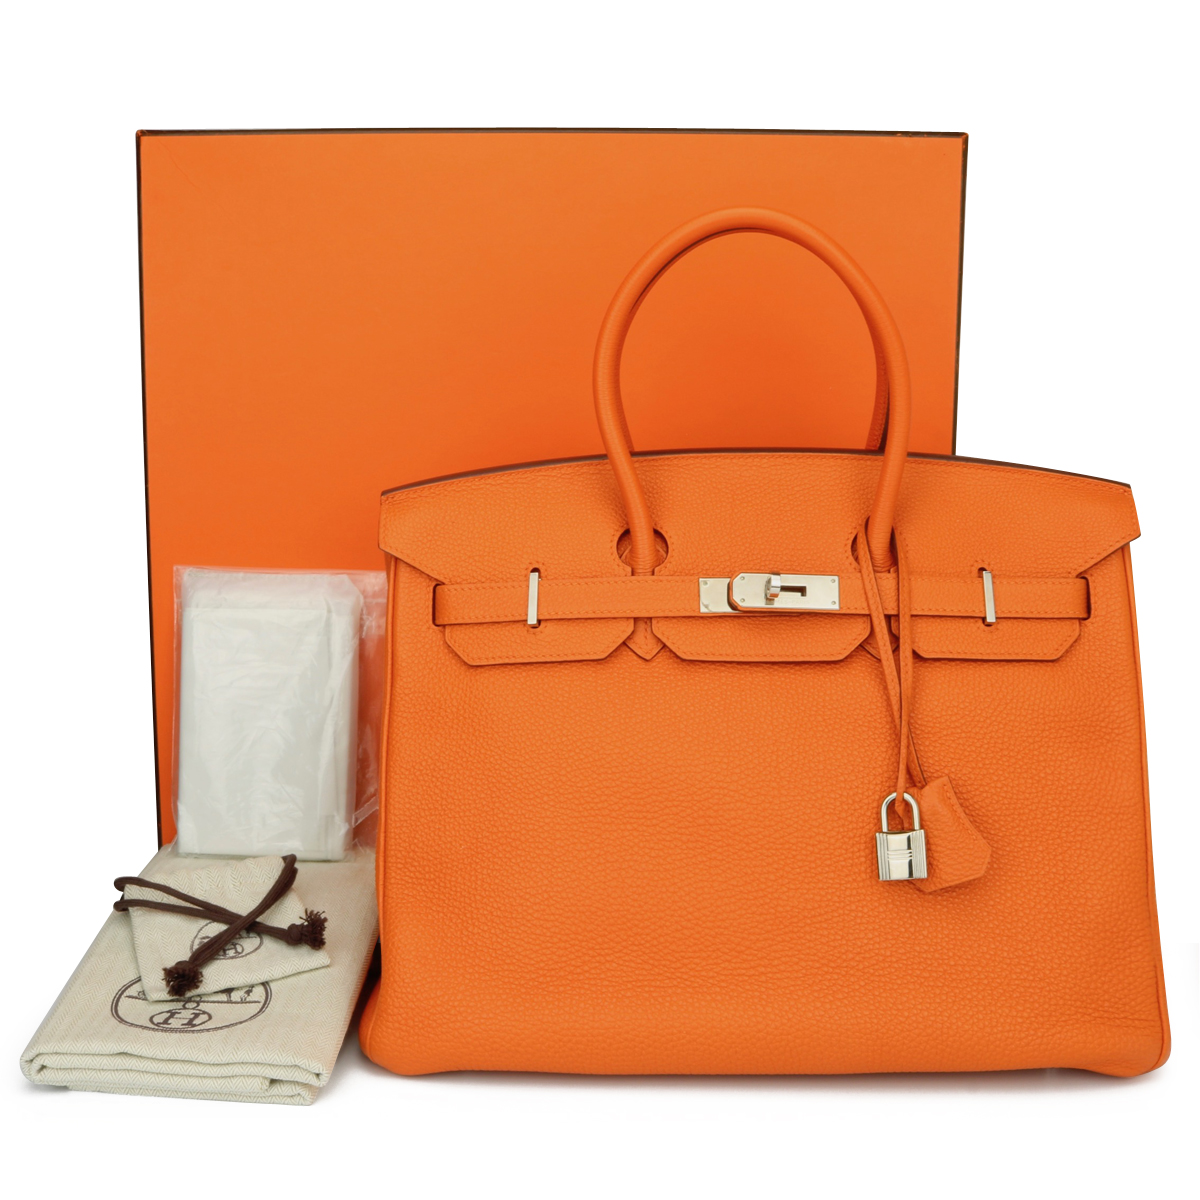 Hermès Orange Togo Leather Palladium Plated Birkin 40 Bag Hermes